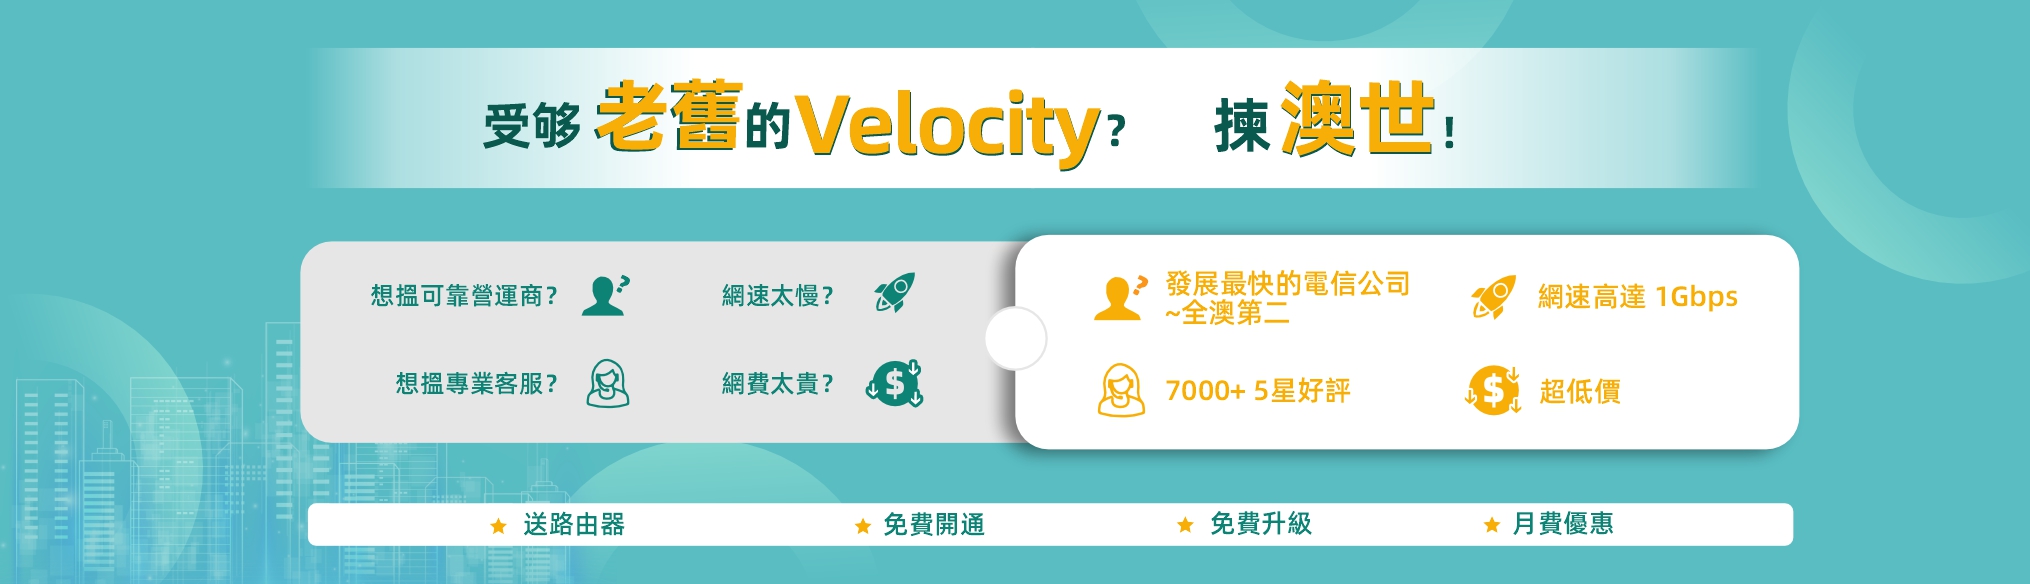 Telstra Velocity 澳世網絡